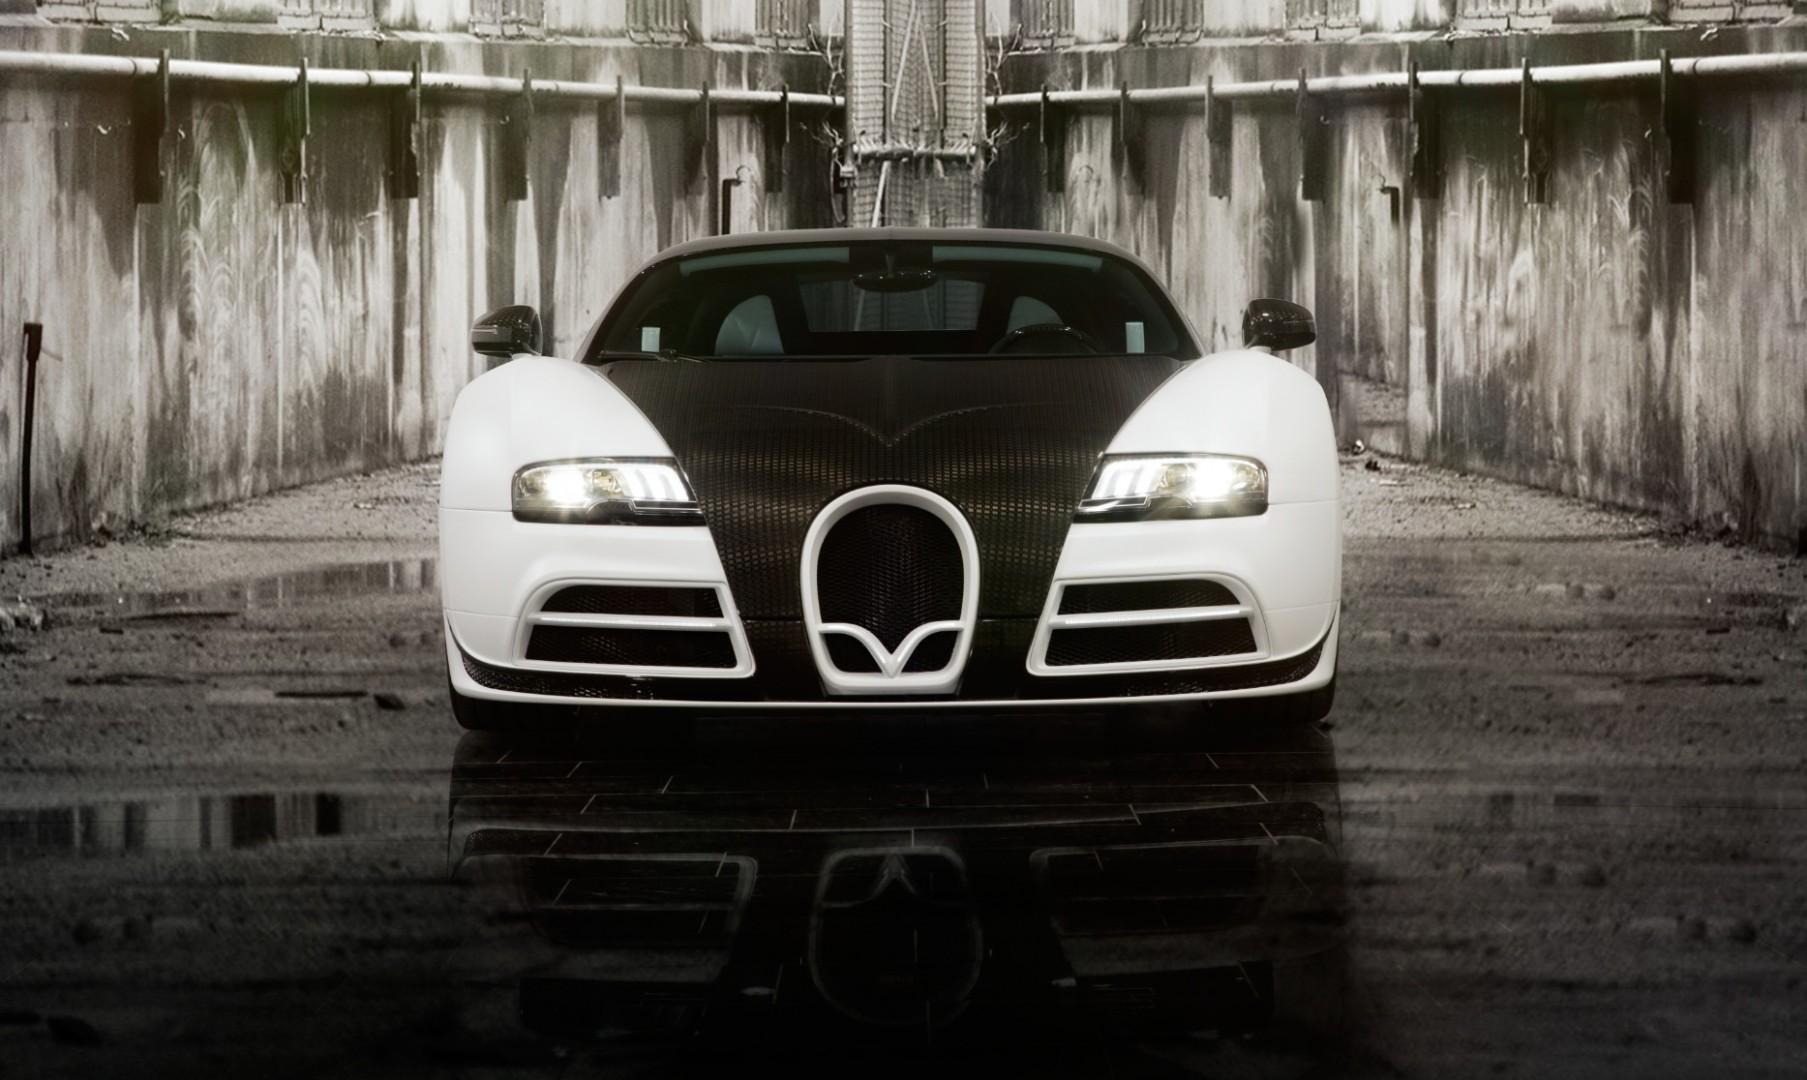 Mansory body kit for Bugatti Veyron carbon